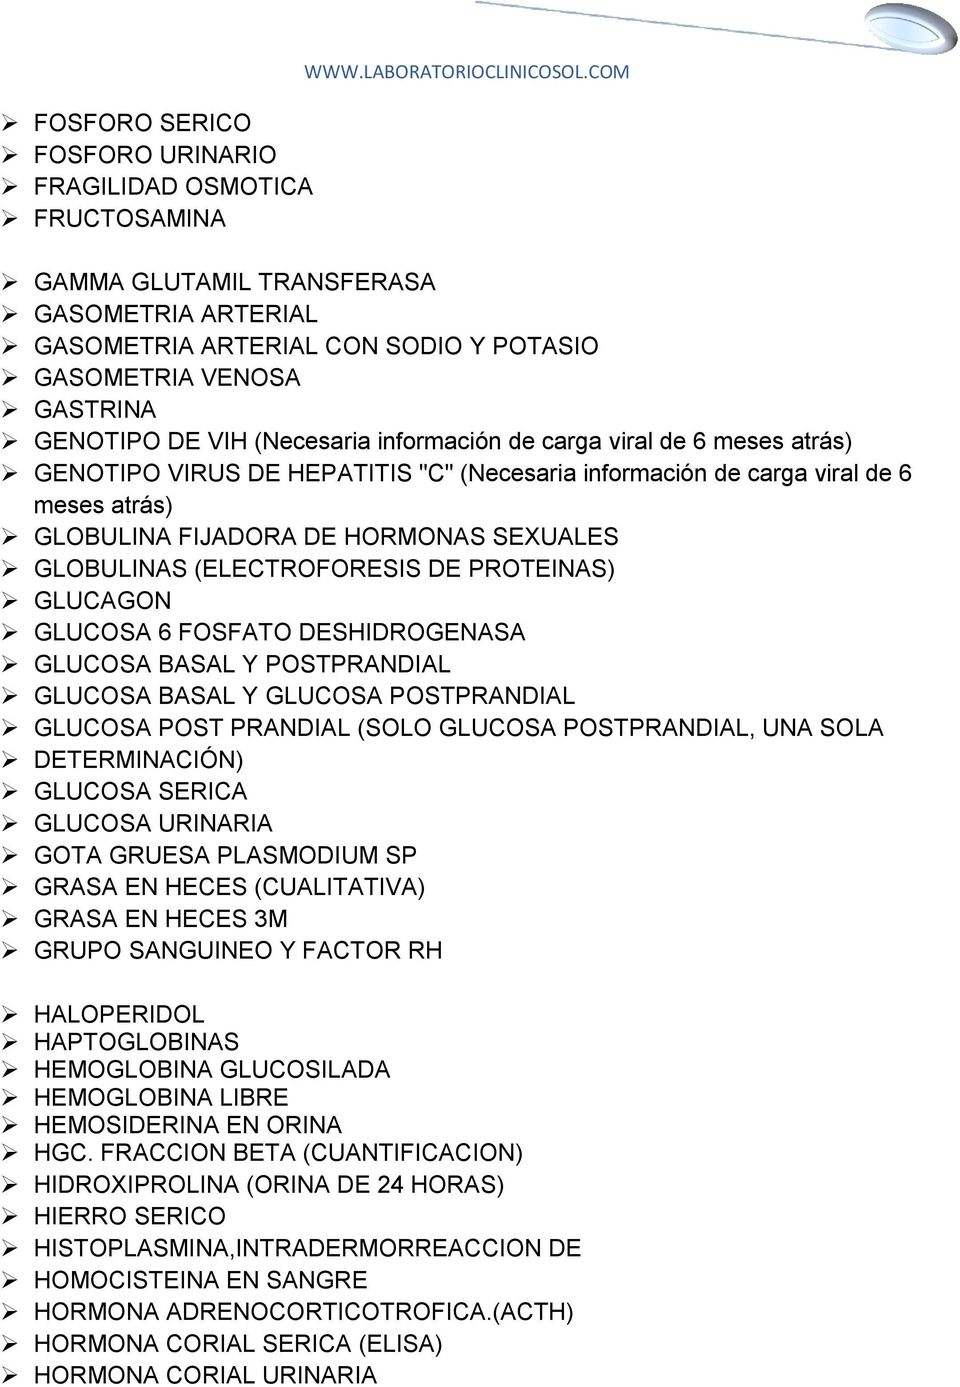 VIRUS DE HEPATITIS "C" (Necesaria información de carga viral de 6 meses atrás) GLOBULINA FIJADORA DE HORMONAS SEXUALES GLOBULINAS (ELECTROFORESIS DE PROTEINAS) GLUCAGON GLUCOSA 6 FOSFATO